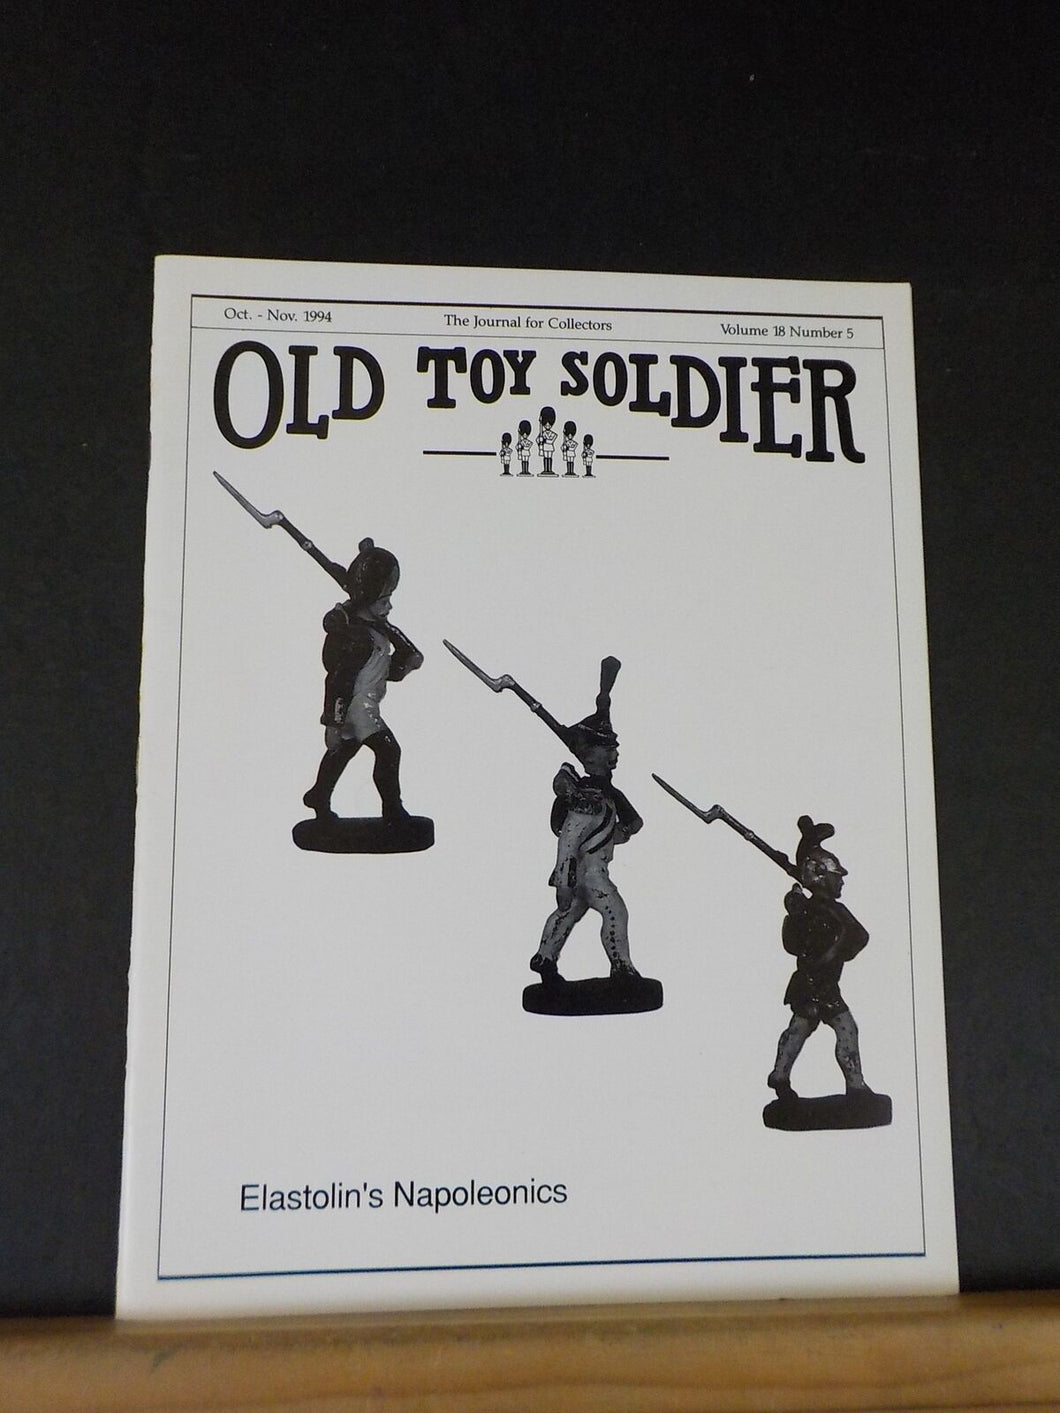 Old Toy Soldier Newsletter Vol 18 #5 1994 Oct-Nov Elastolin's Napoleonics